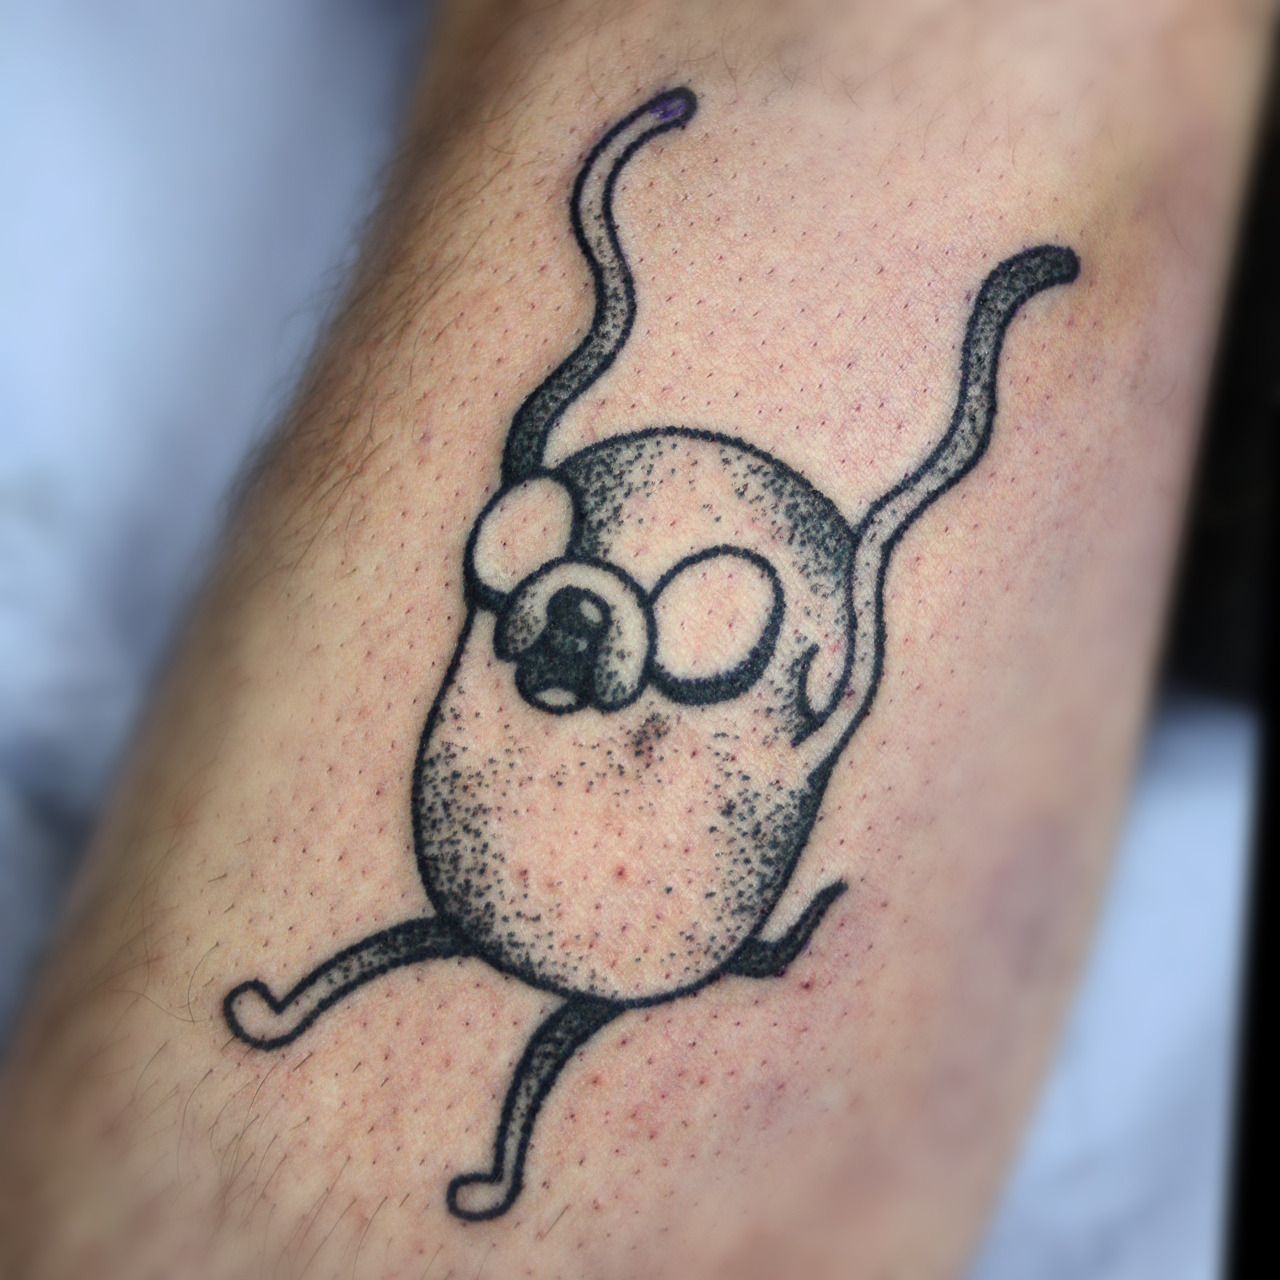 Tattoo uploaded by John Denmat  Adventure Time  Tattoodo